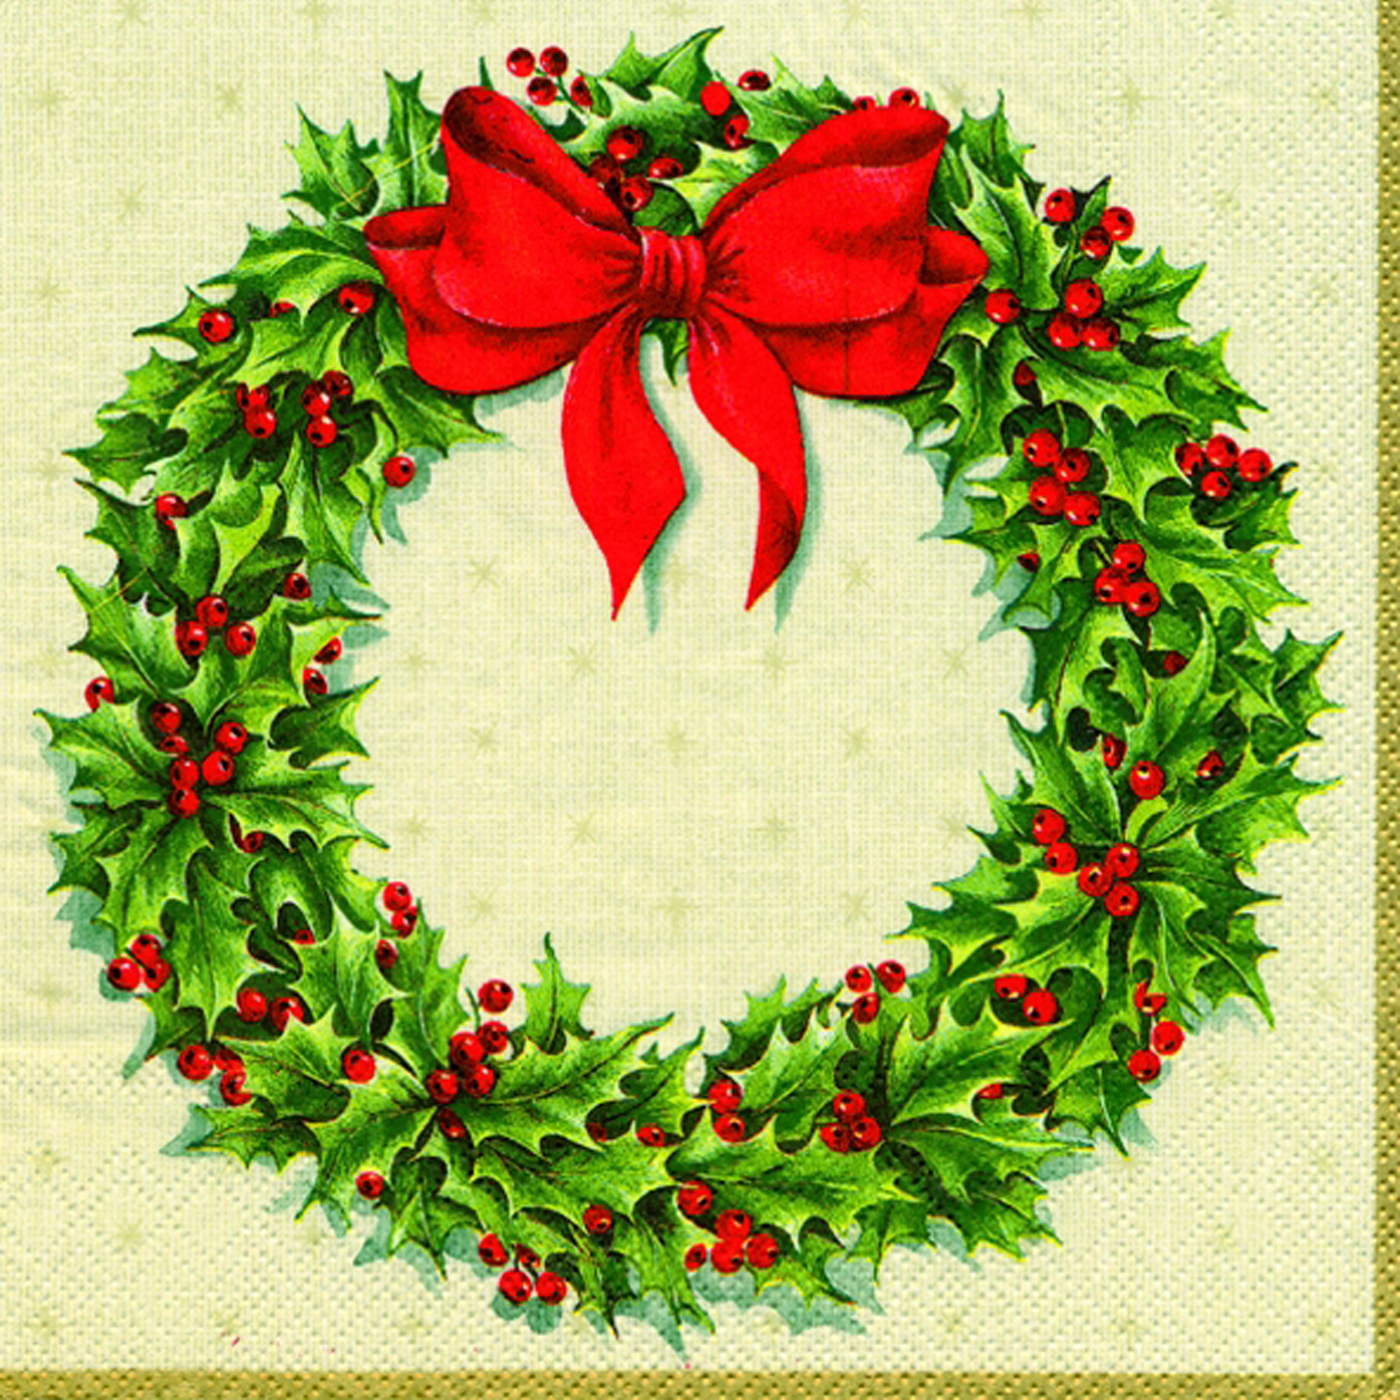 [51+] Christmas Wreaths Wallpapers WallpaperSafari